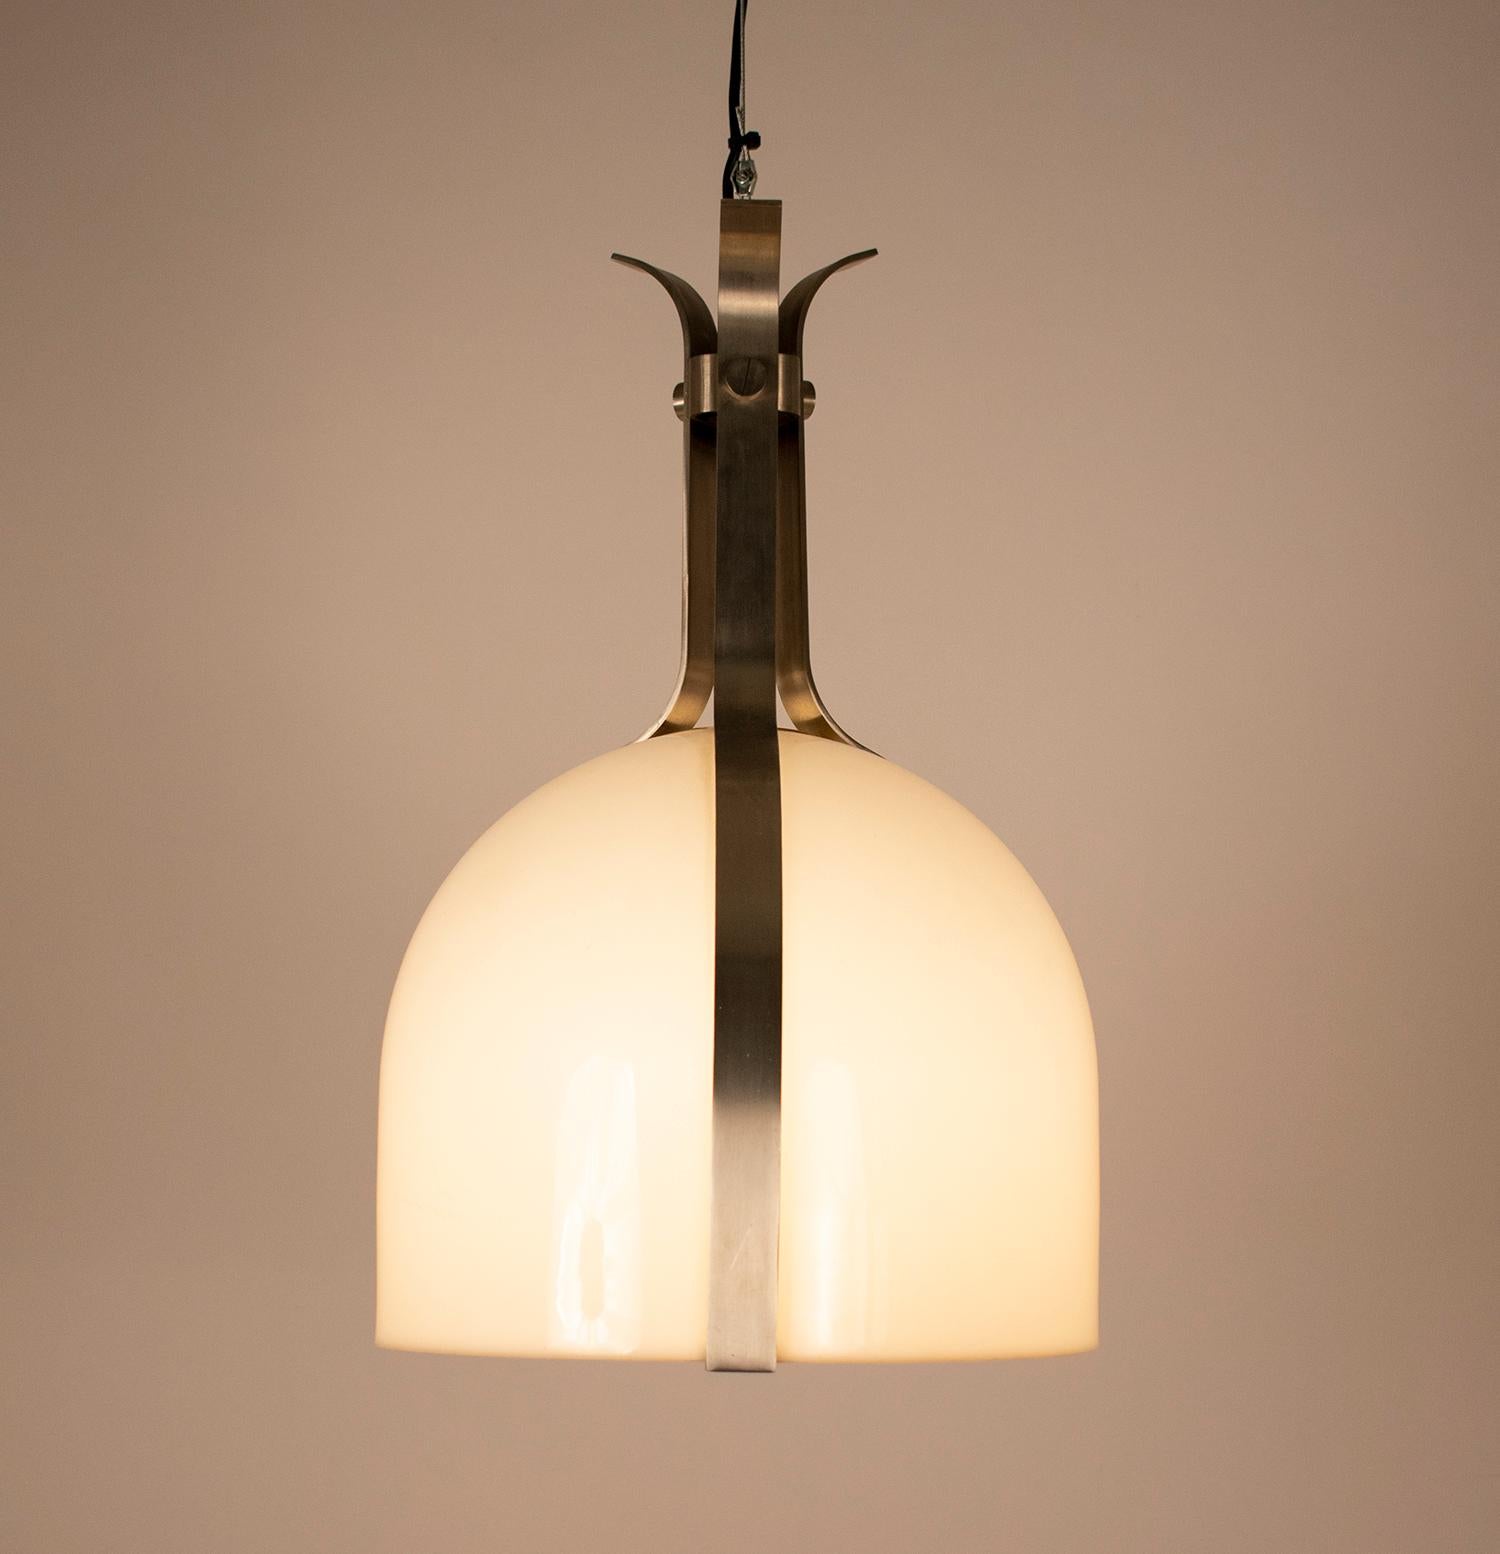 Ceiling lamp designed by Jordi Vilanova, Catalan designer in 1970.

Steel and methacrylate.